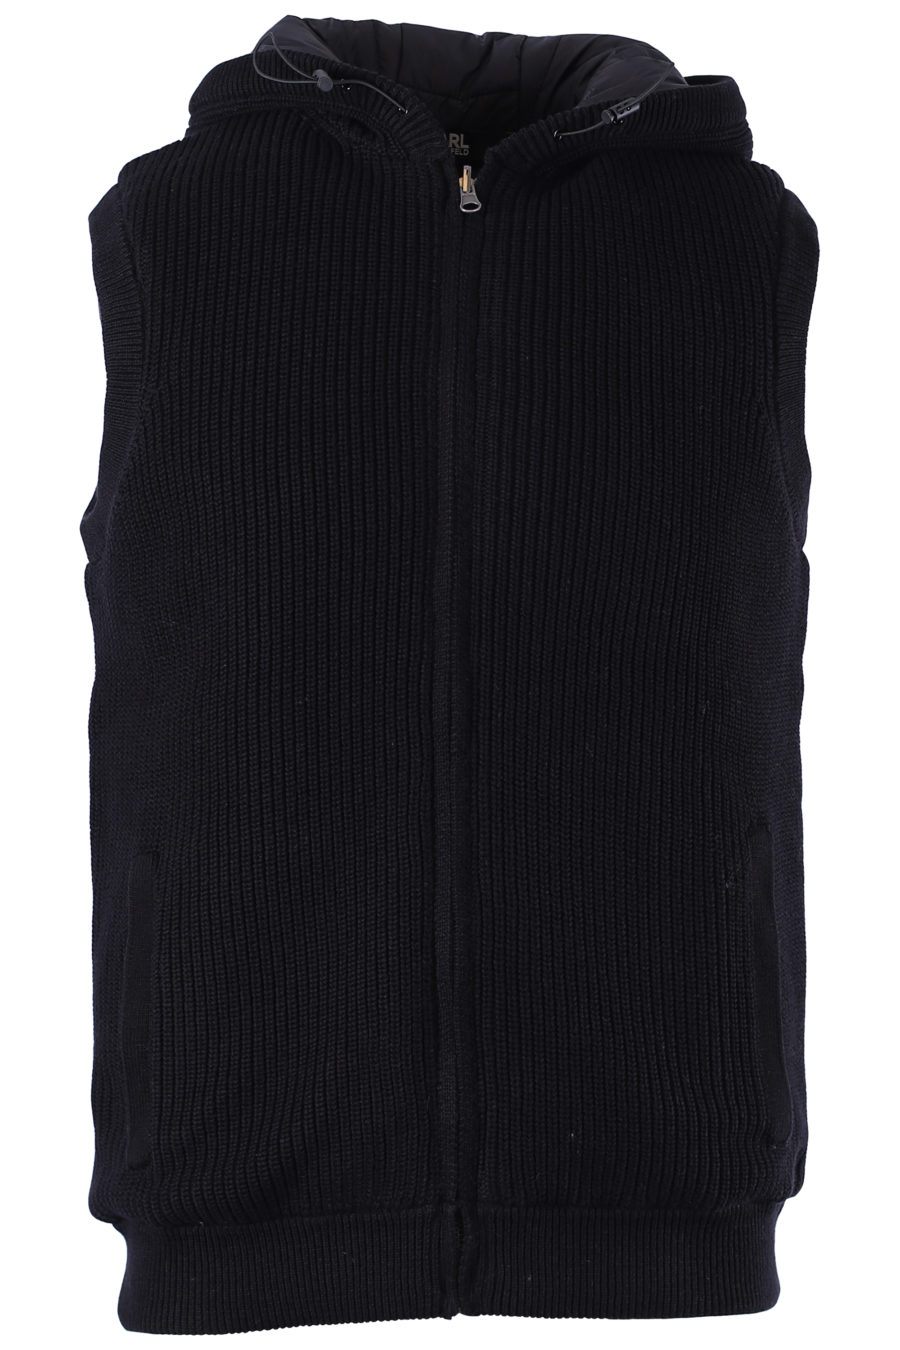 Reversible black knitted waistcoat - IMG 0549